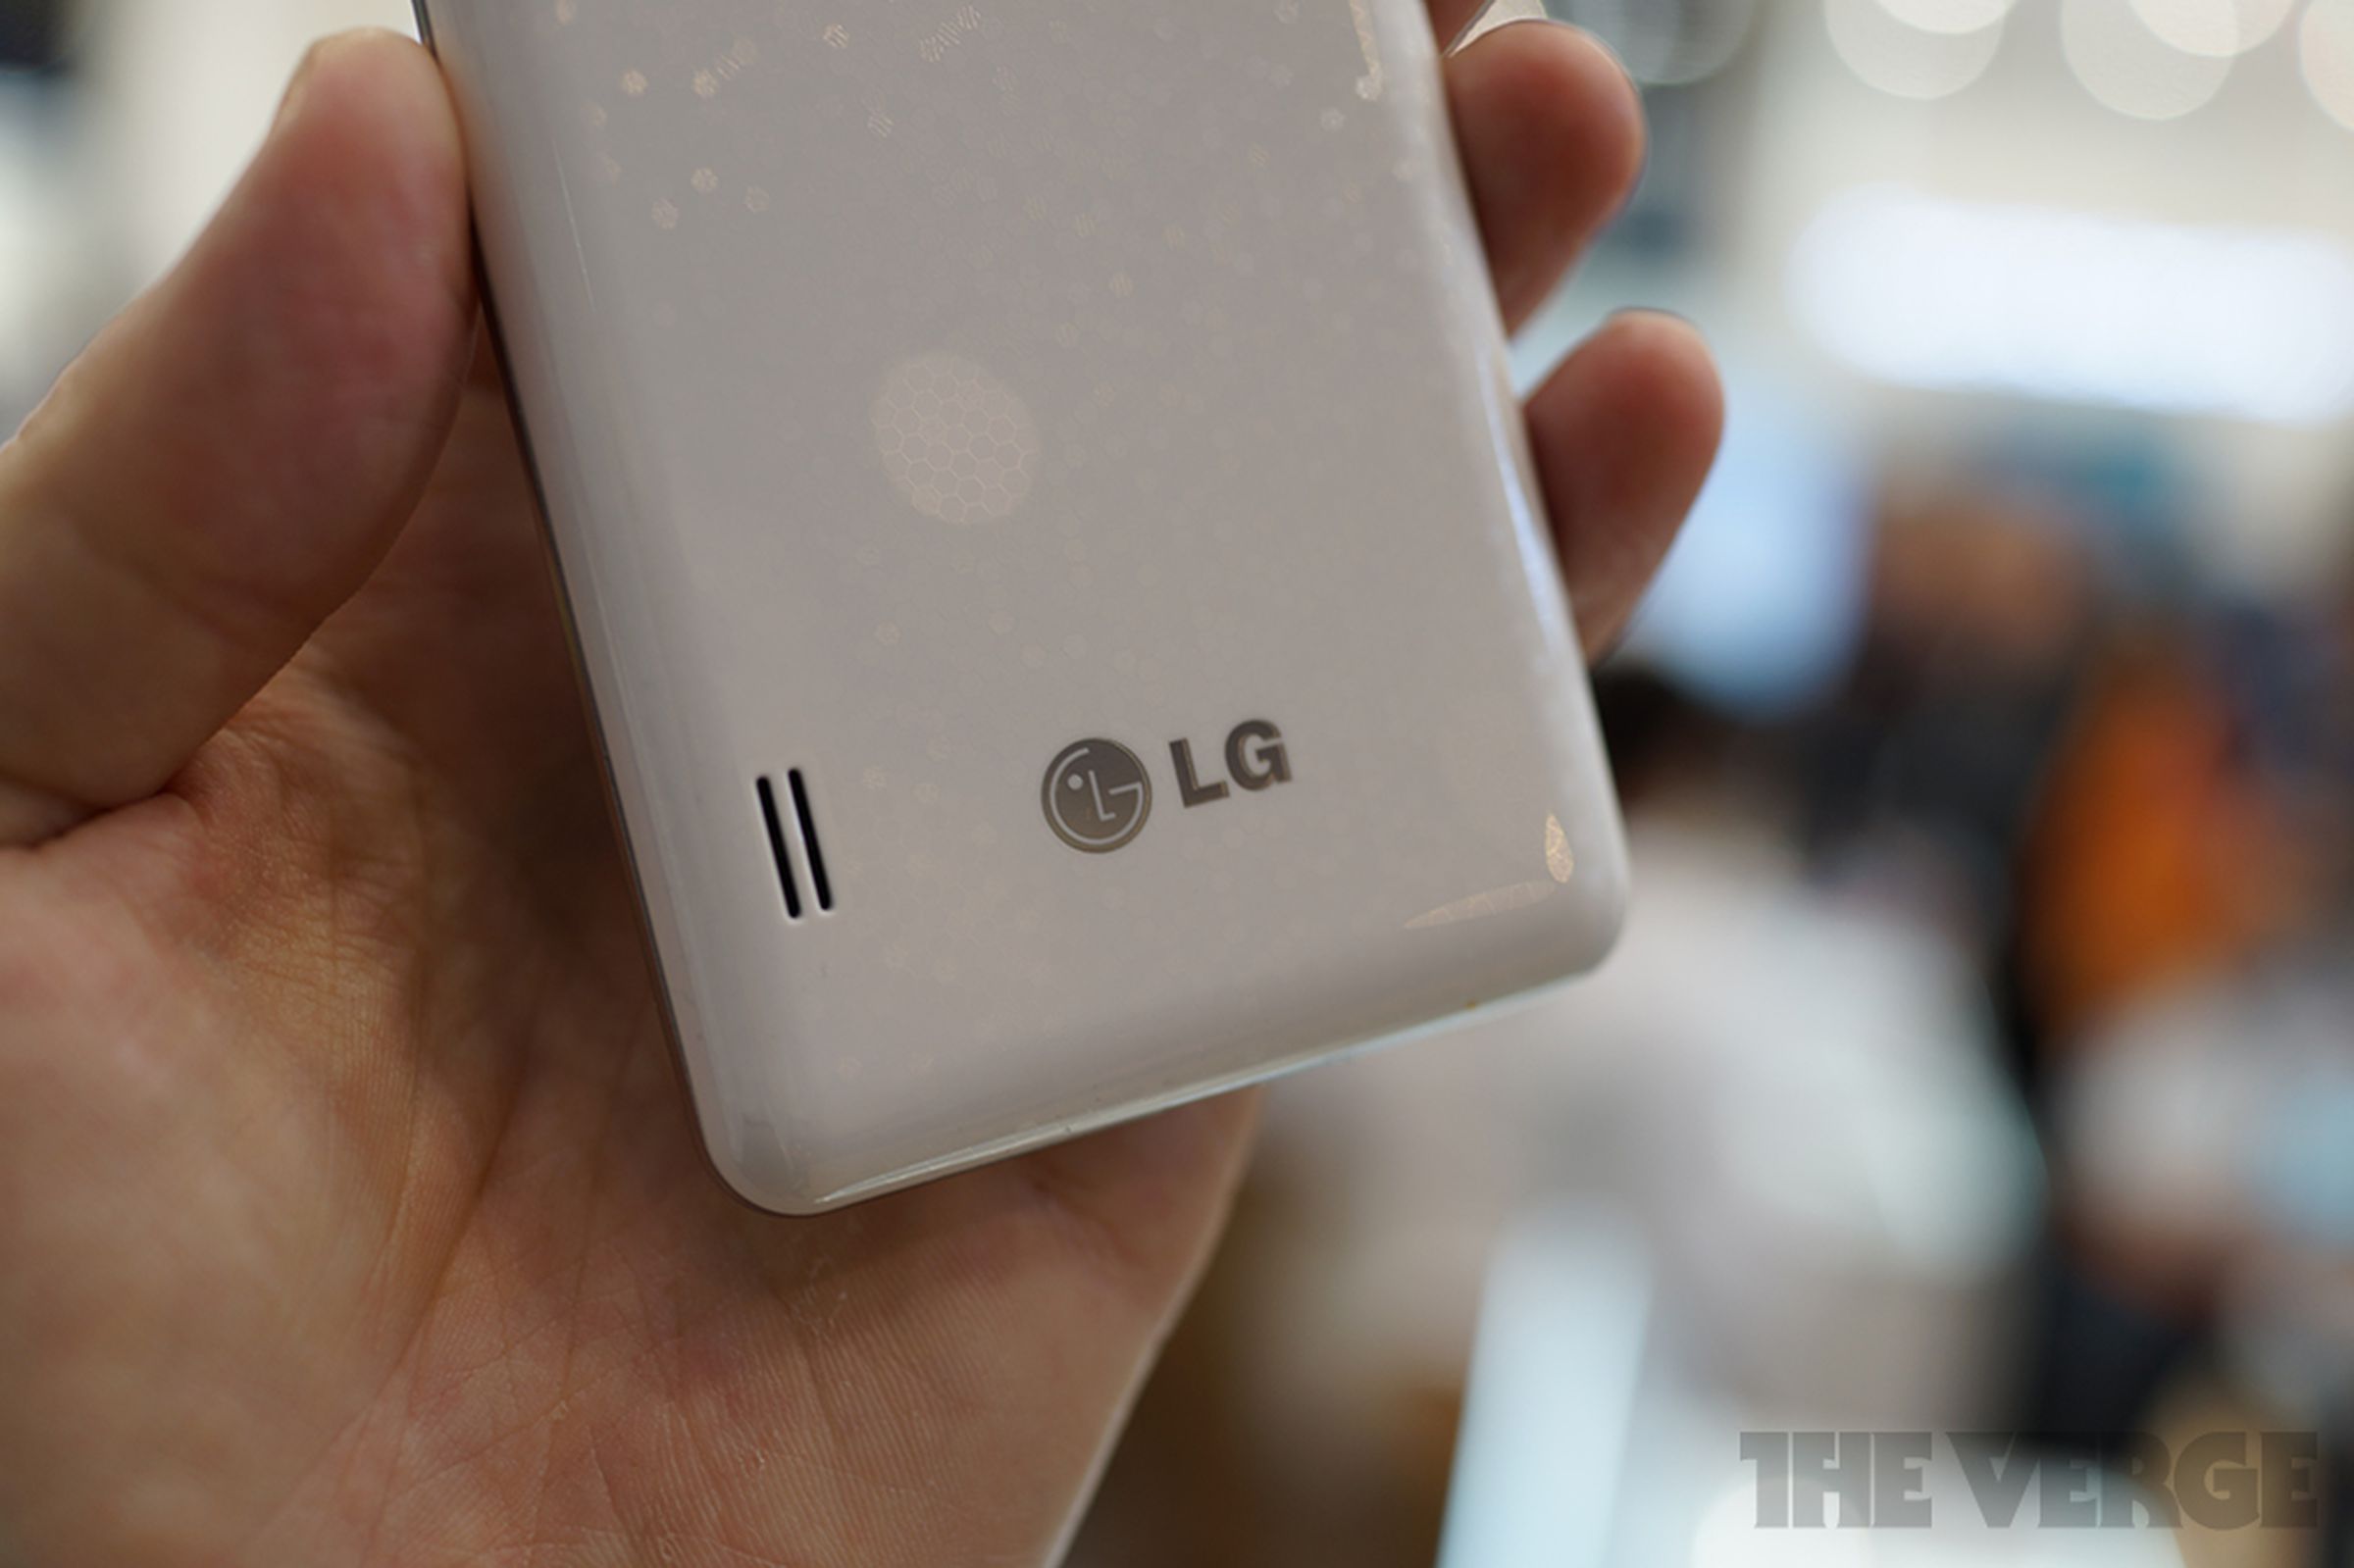 LG Optimus F7 hands-on photos